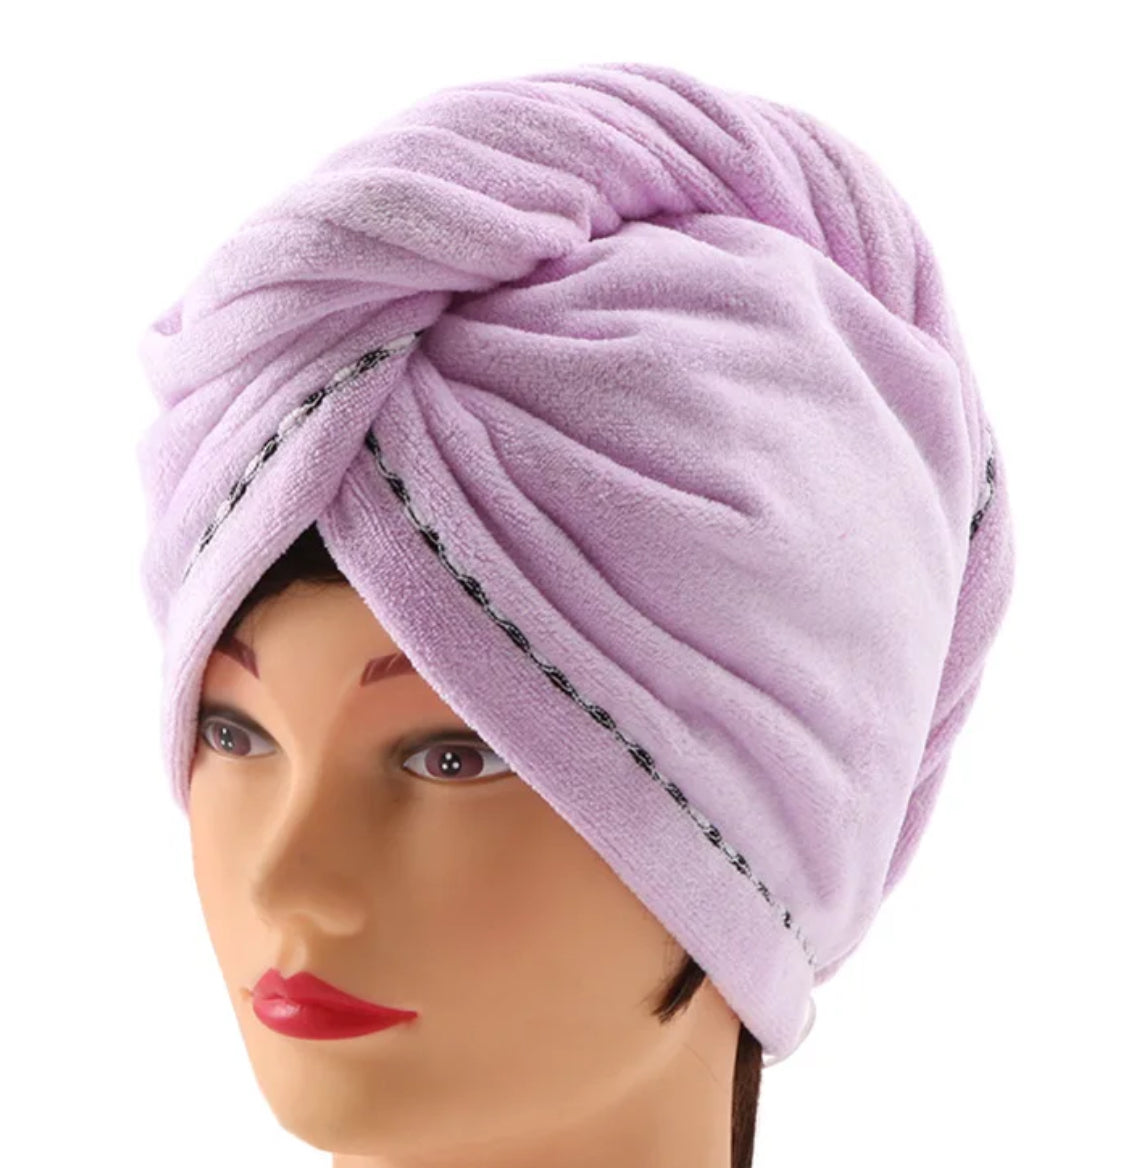 Hair towel Turban